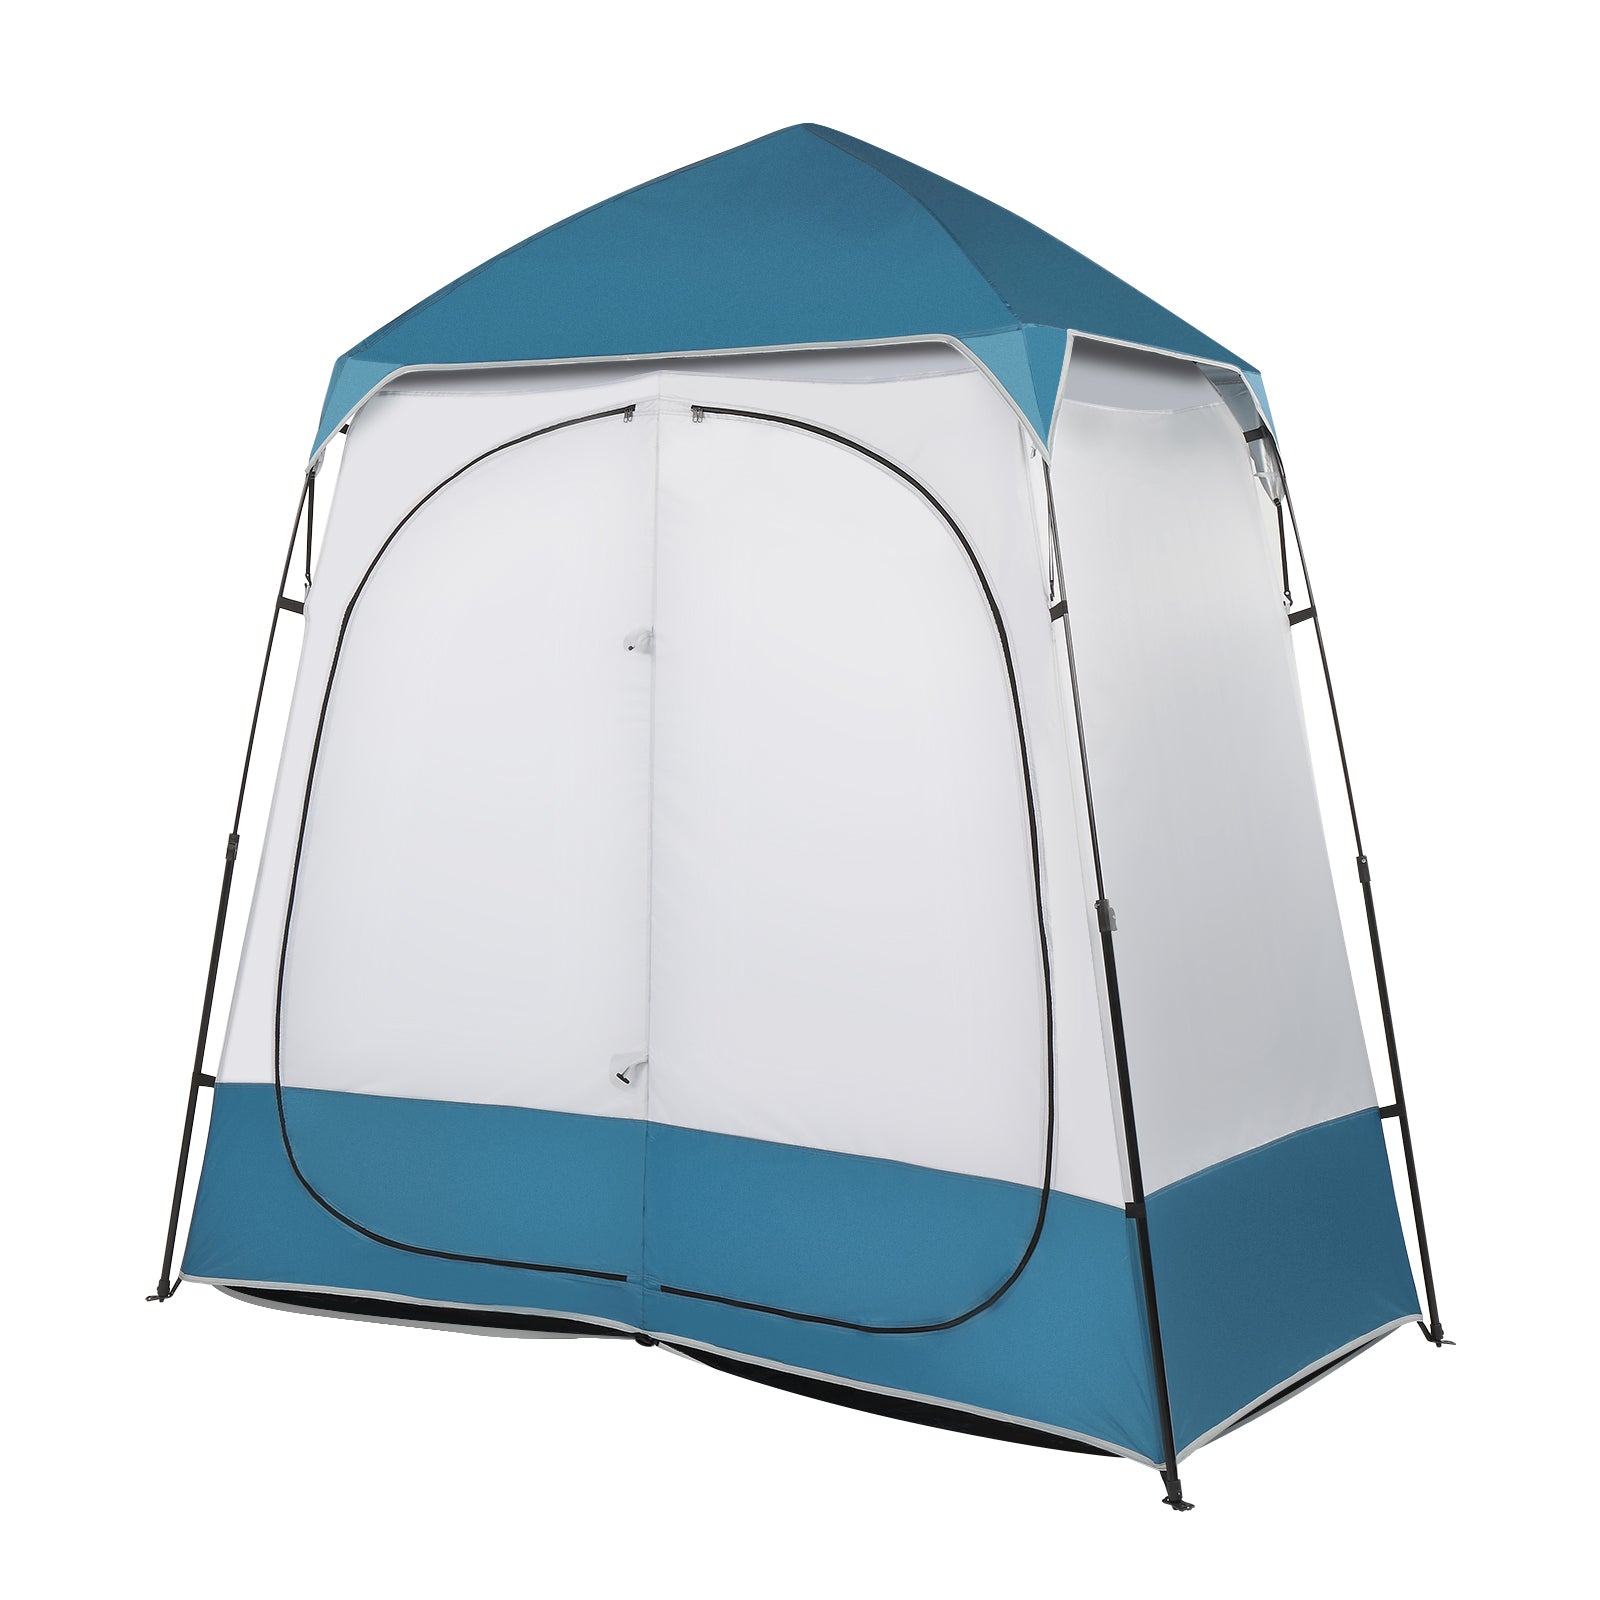 229*229*122cm Oxford Cloth Double Dressing Tent Blue/White - Team Spirit Store USA 